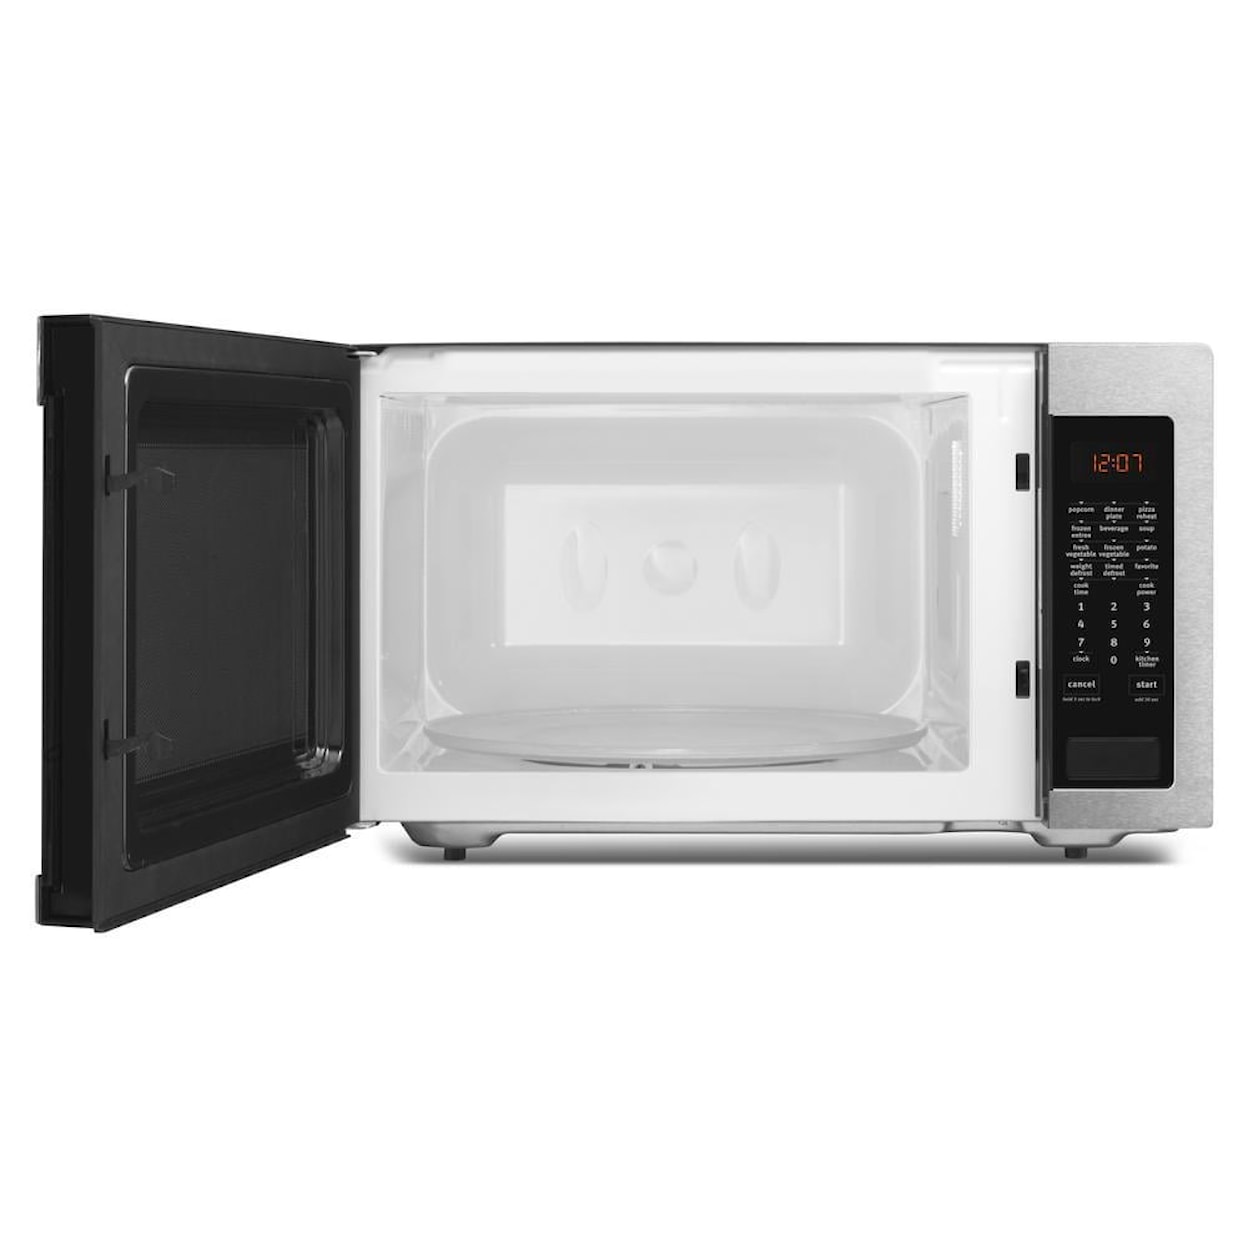 Whirlpool Microwave Countertop Microwave